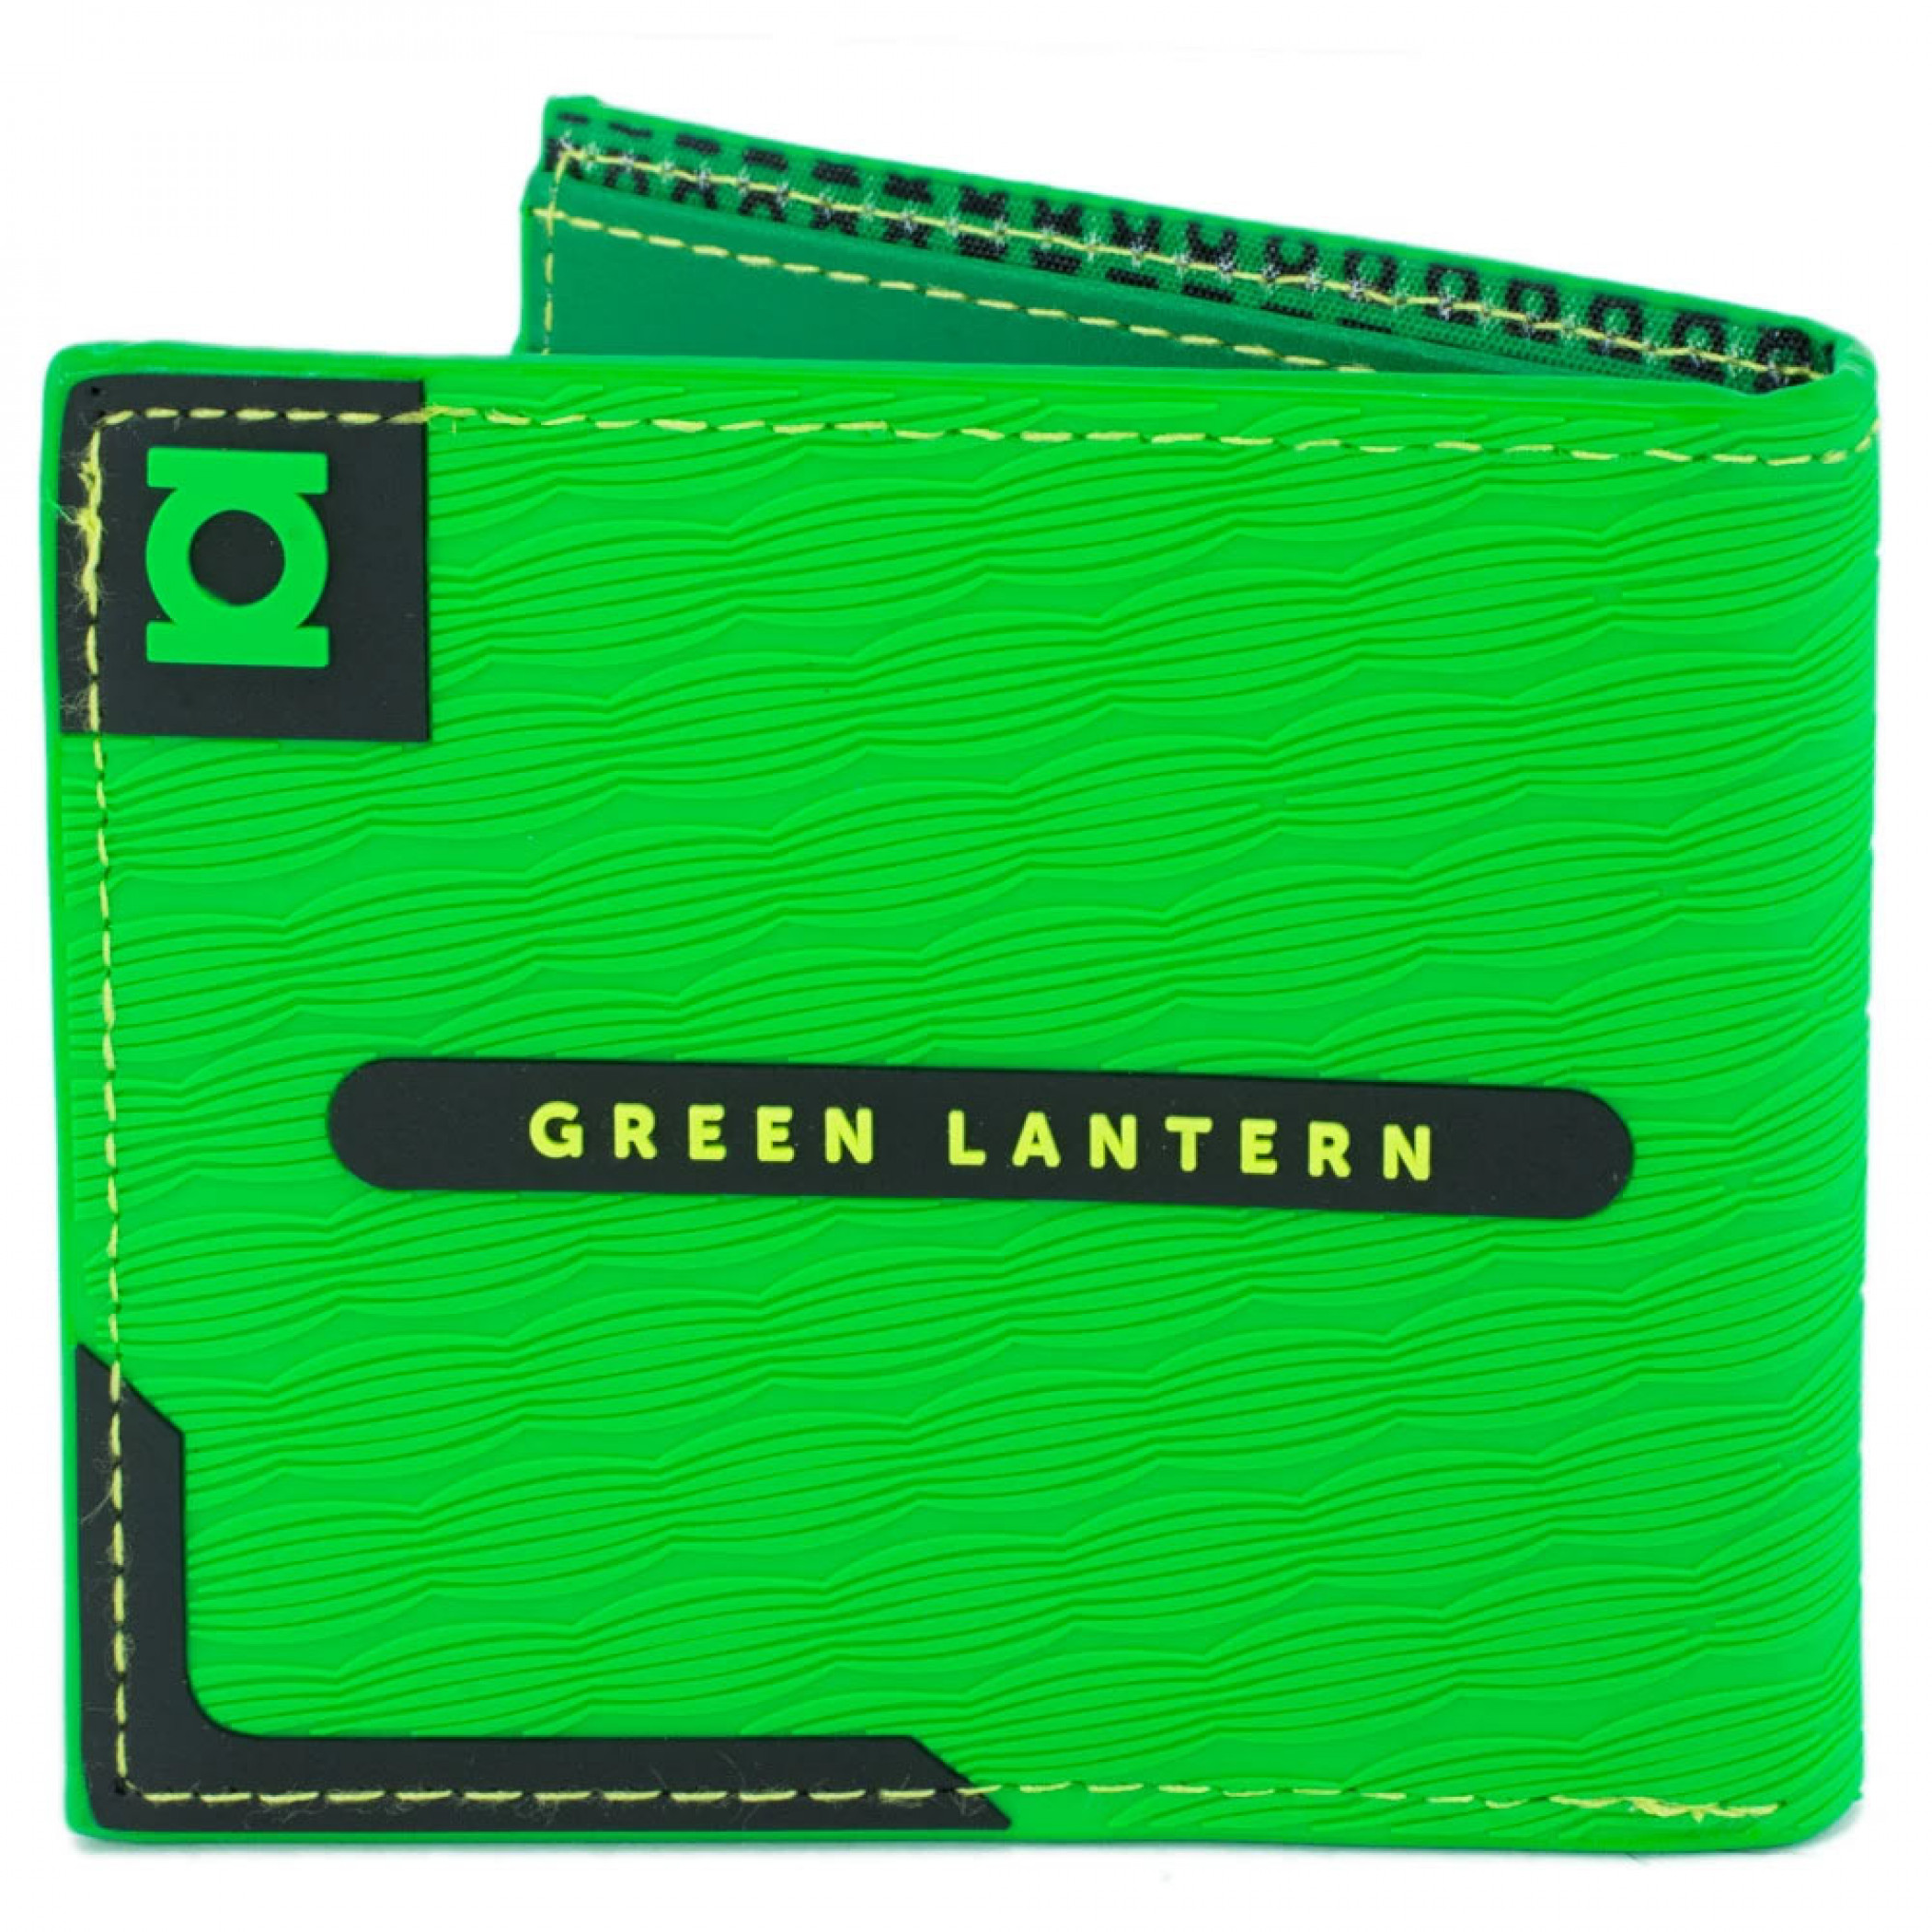 Green Lantern Wallet